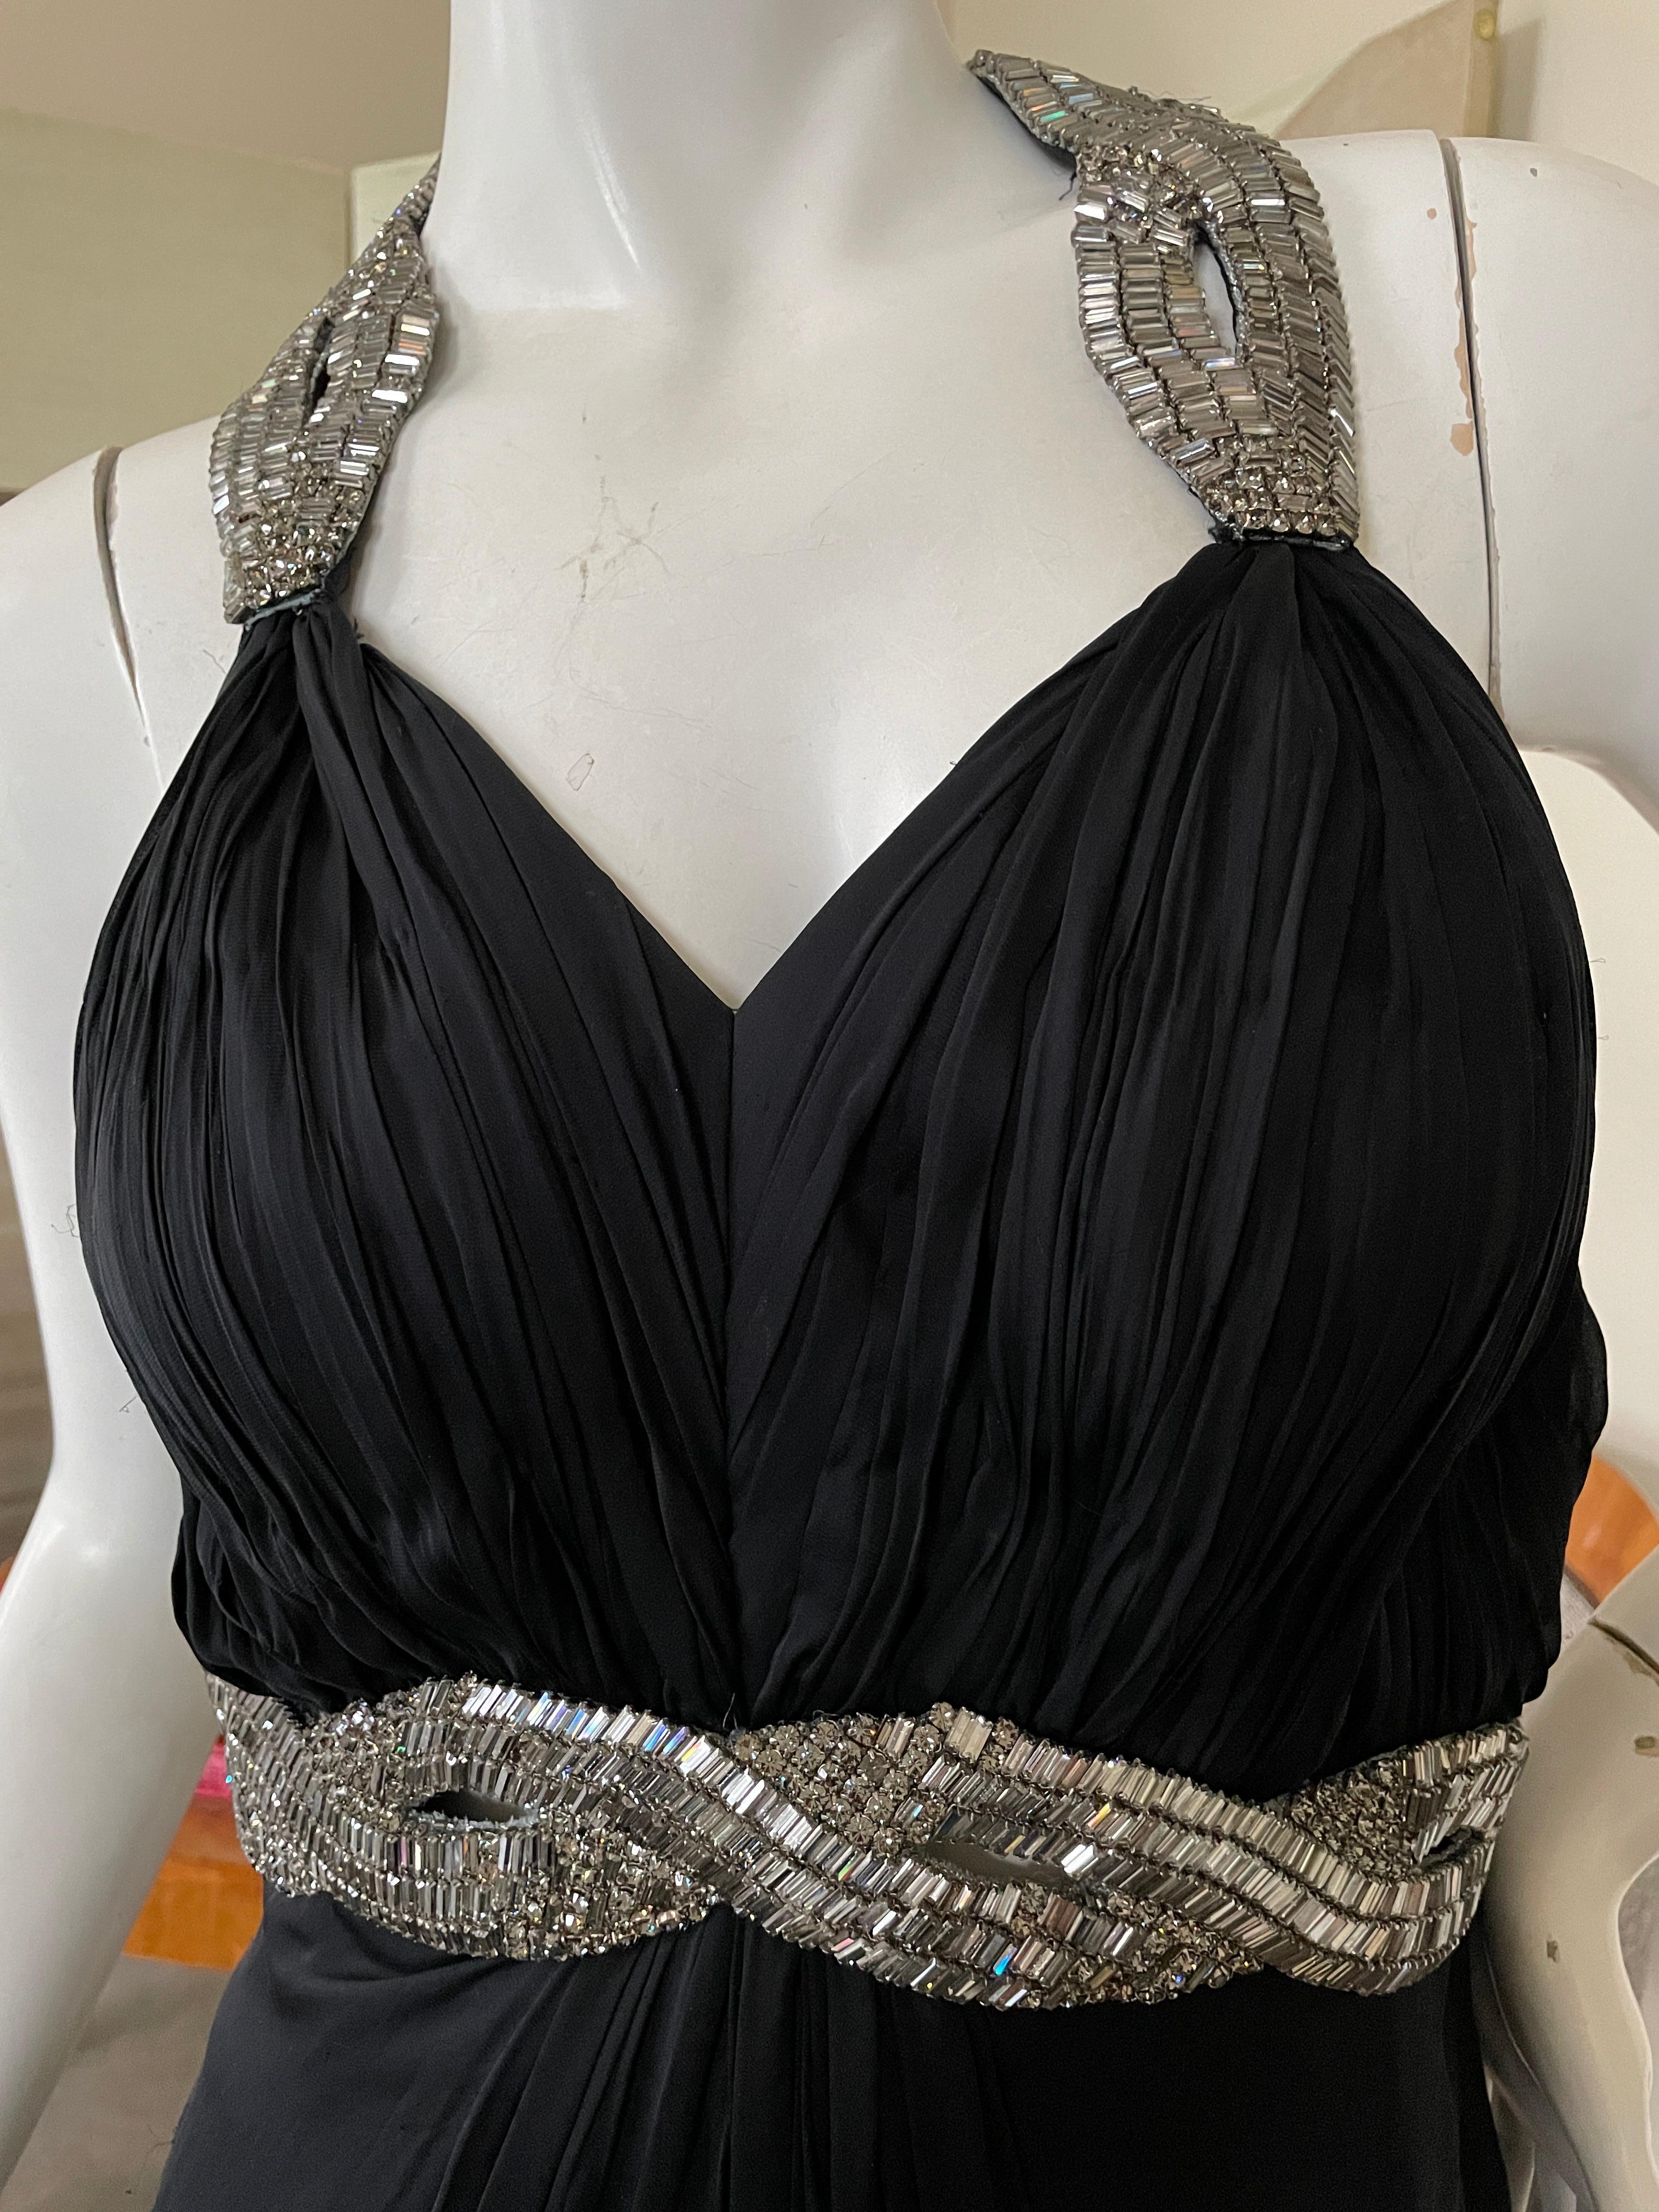 extravagant black dress